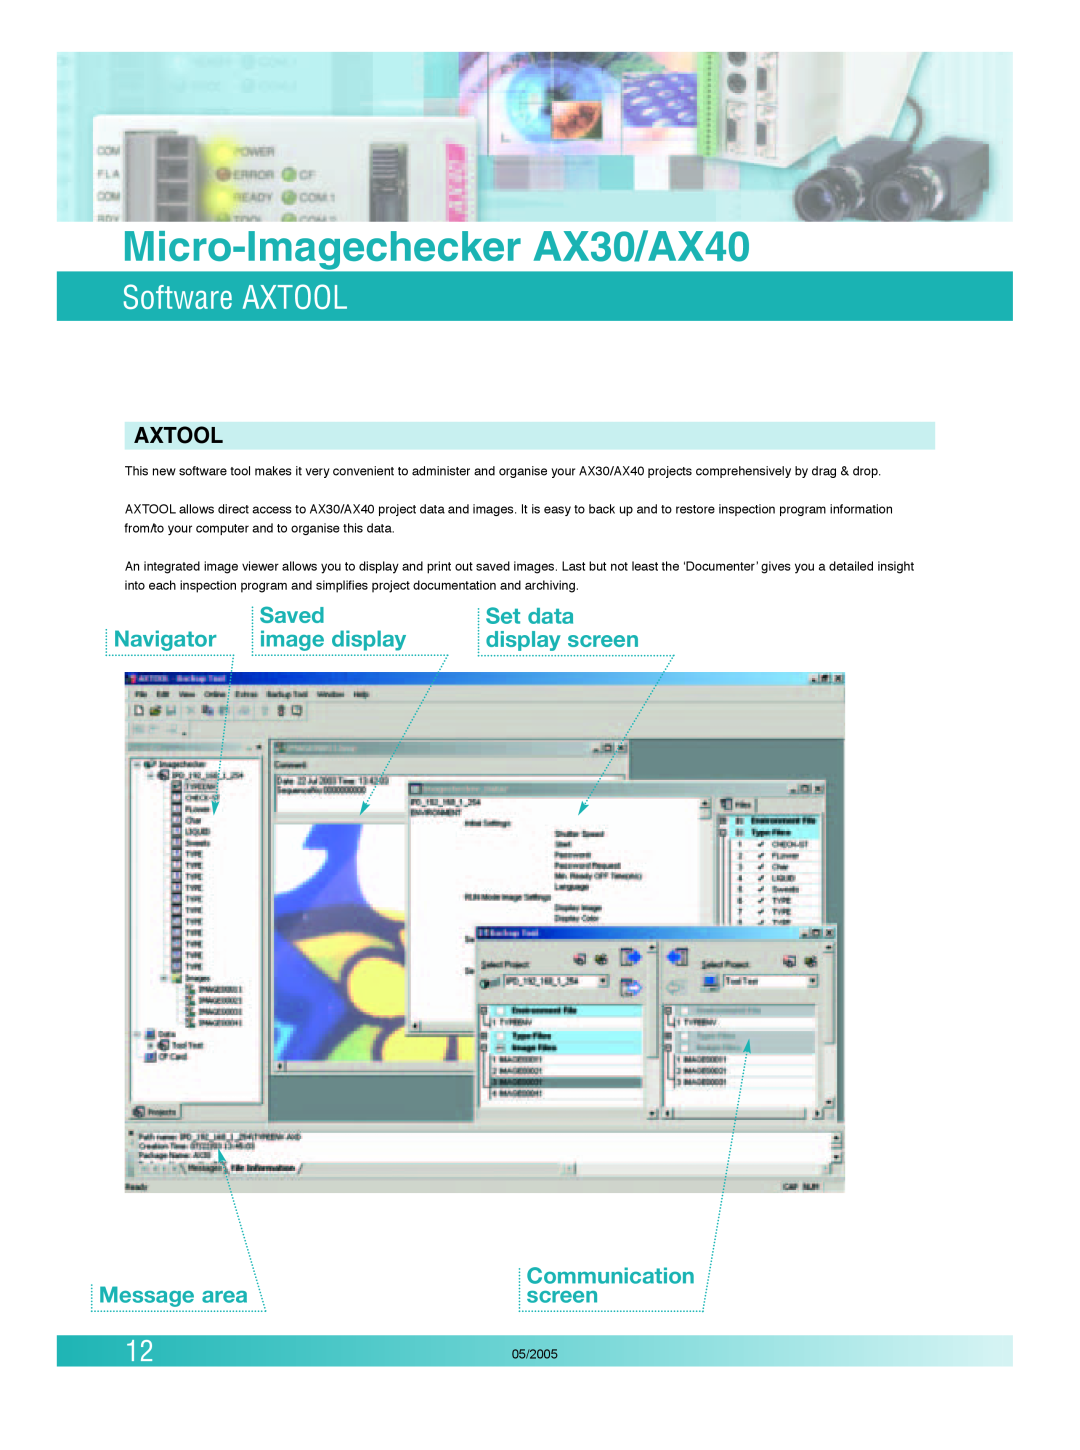 Panasonic Software AXTOOL, Axtool, Micro-Imagechecker AX30/AX40, Saved, Set data, Navigator, image display, screen 